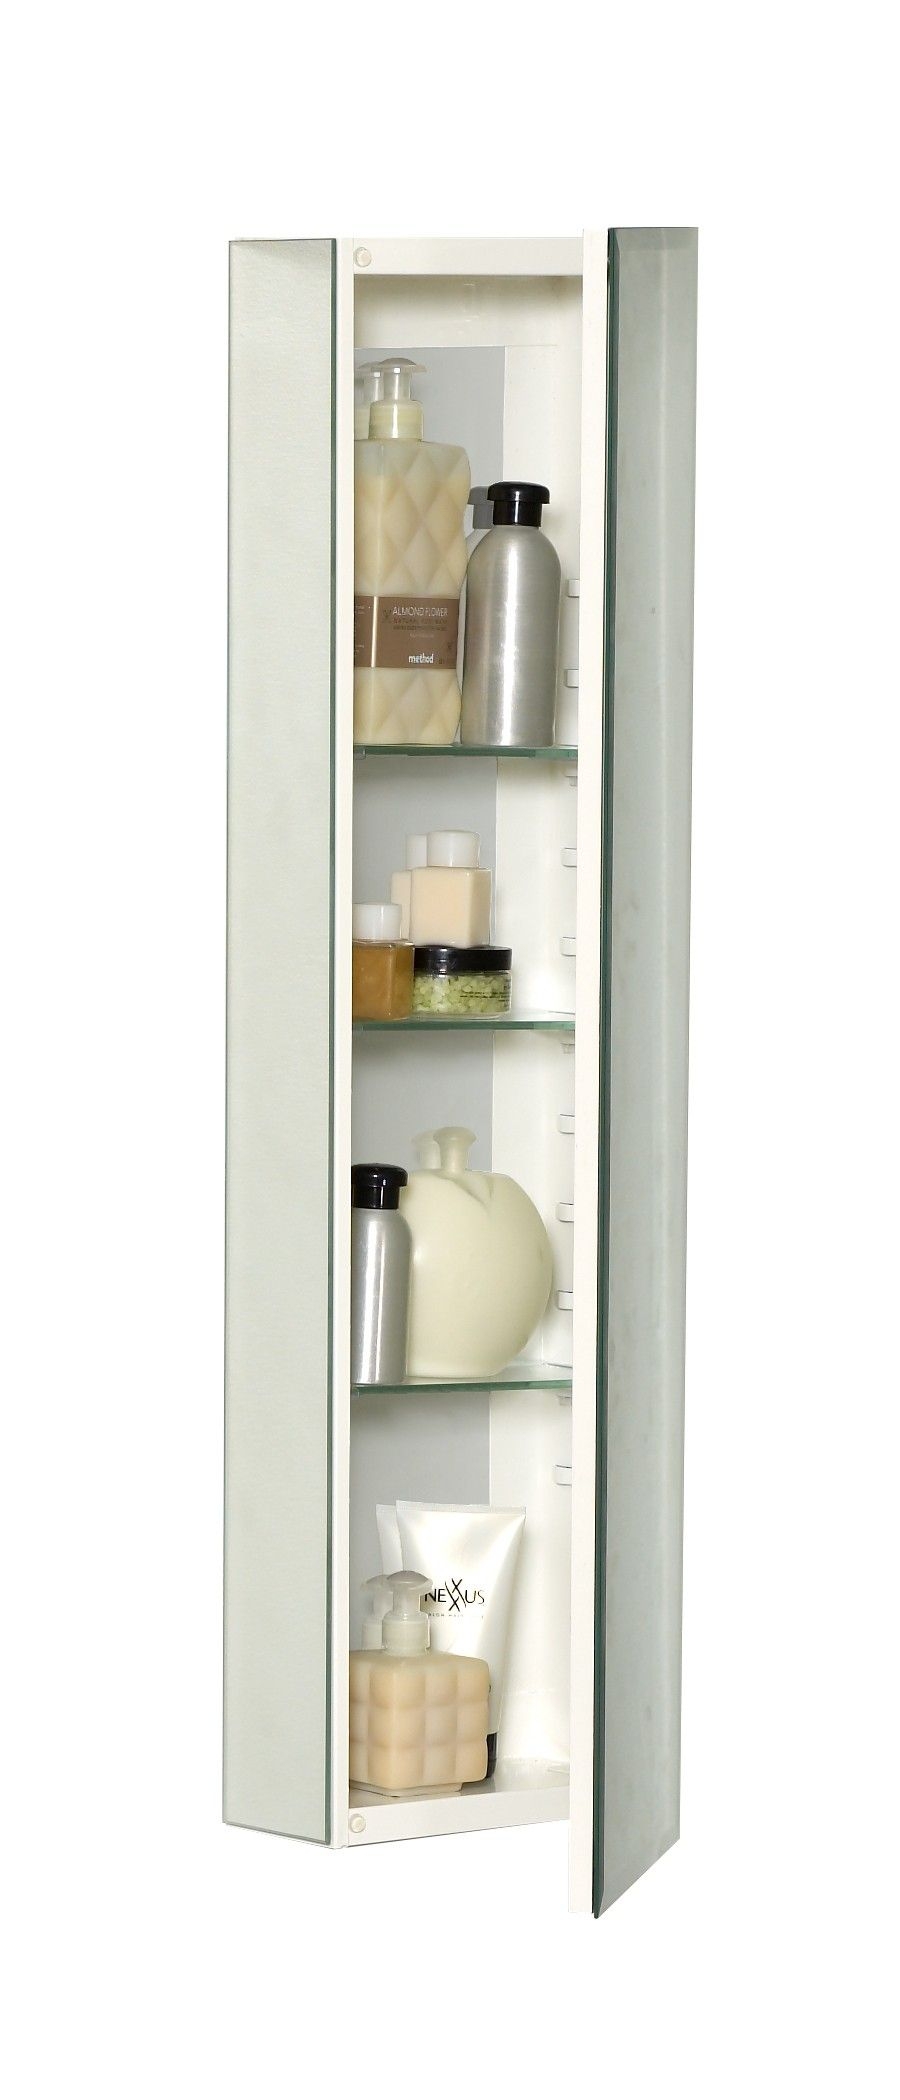 Custom medicine cabinets with mirrors